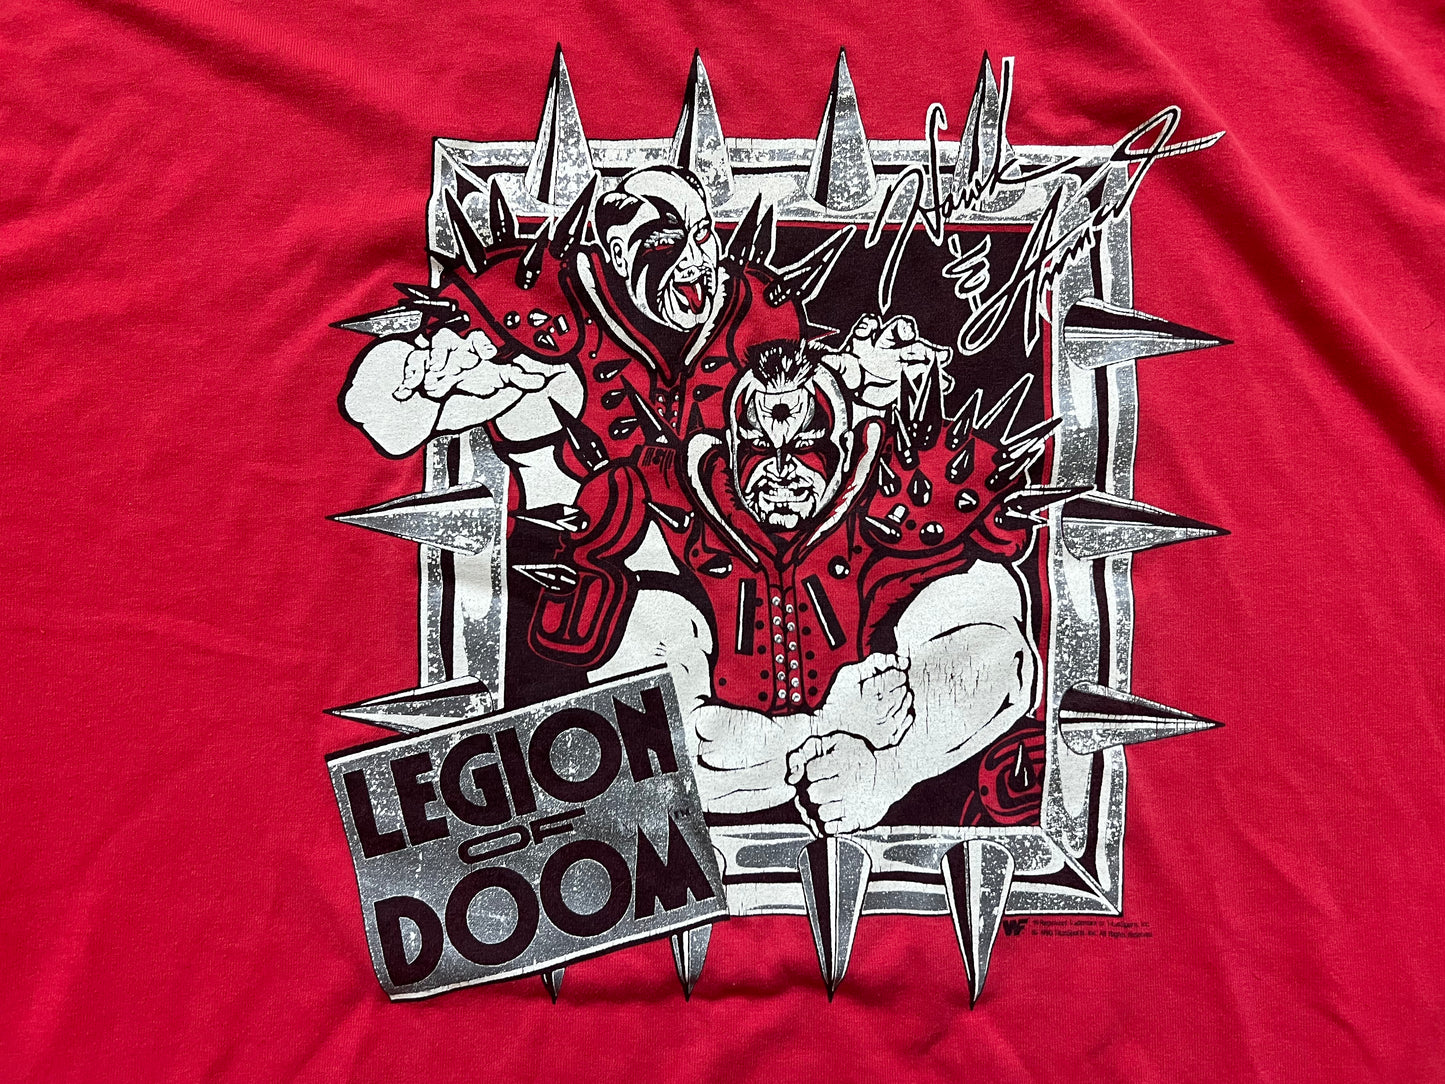 1990 WWF Legion of Doom shirt